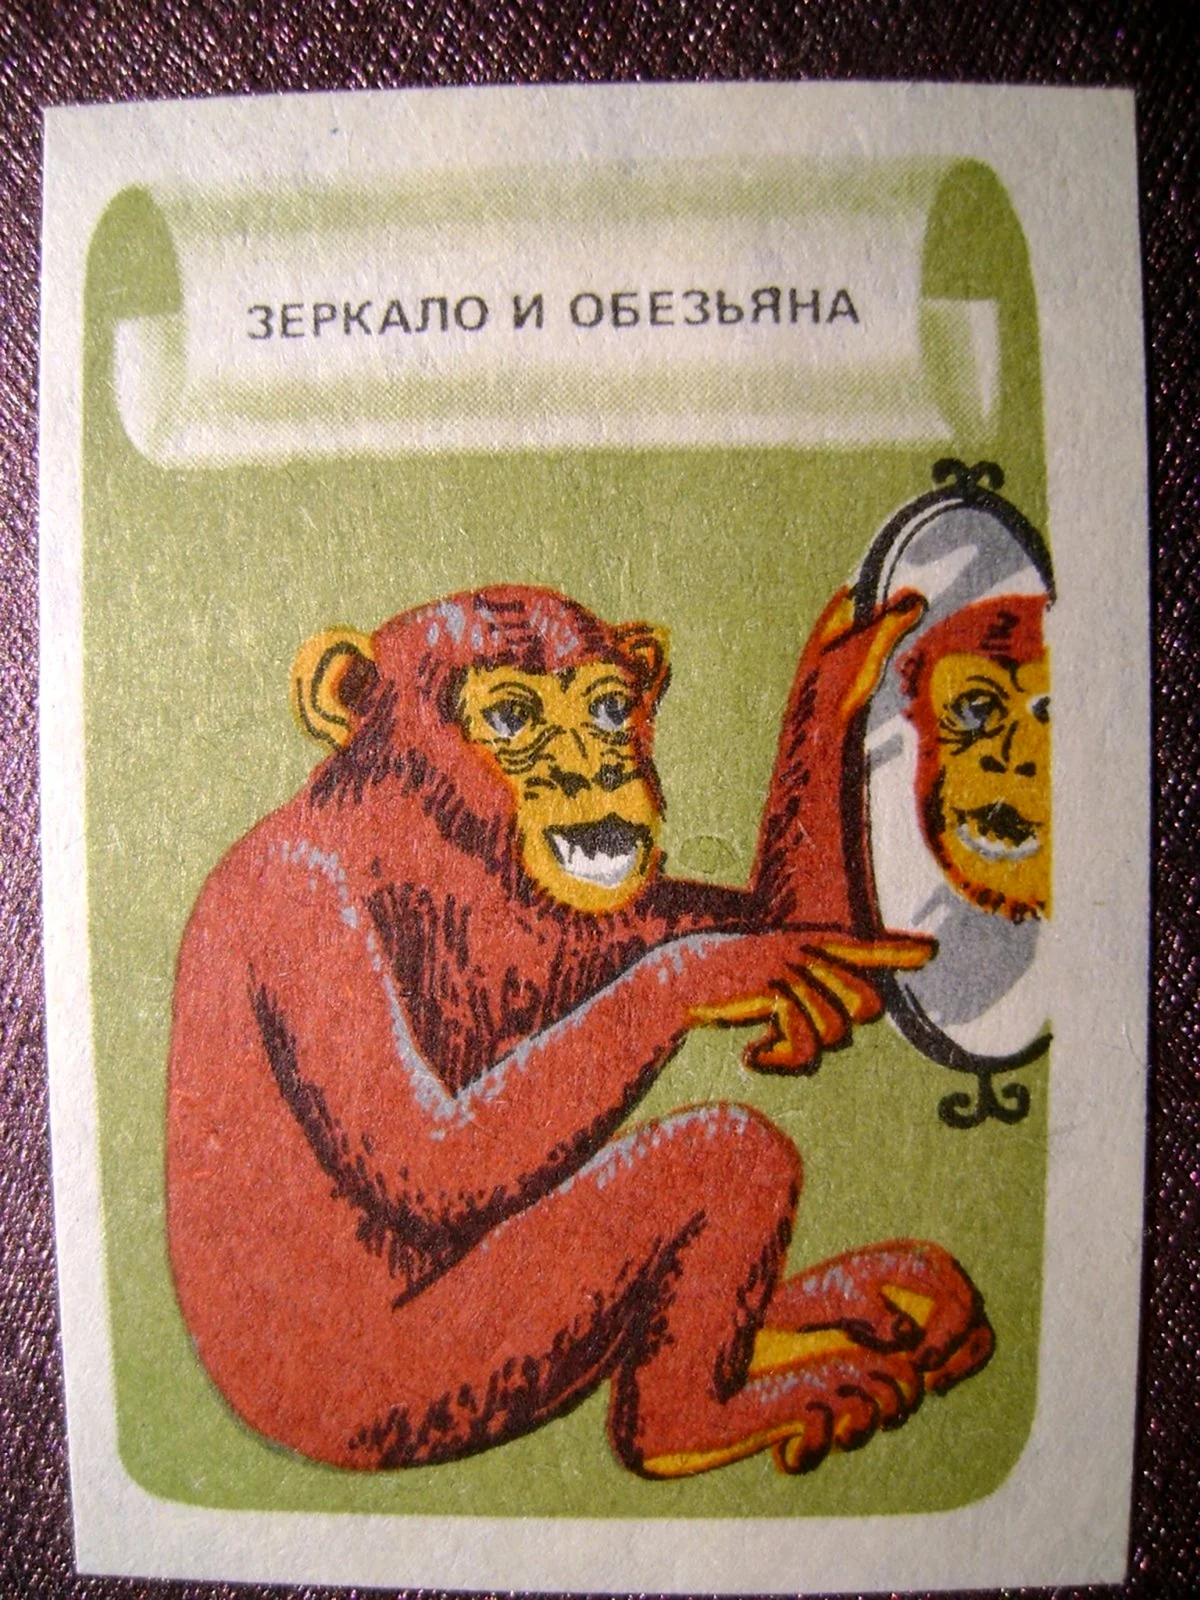 Крылов зеркало и обезьяна